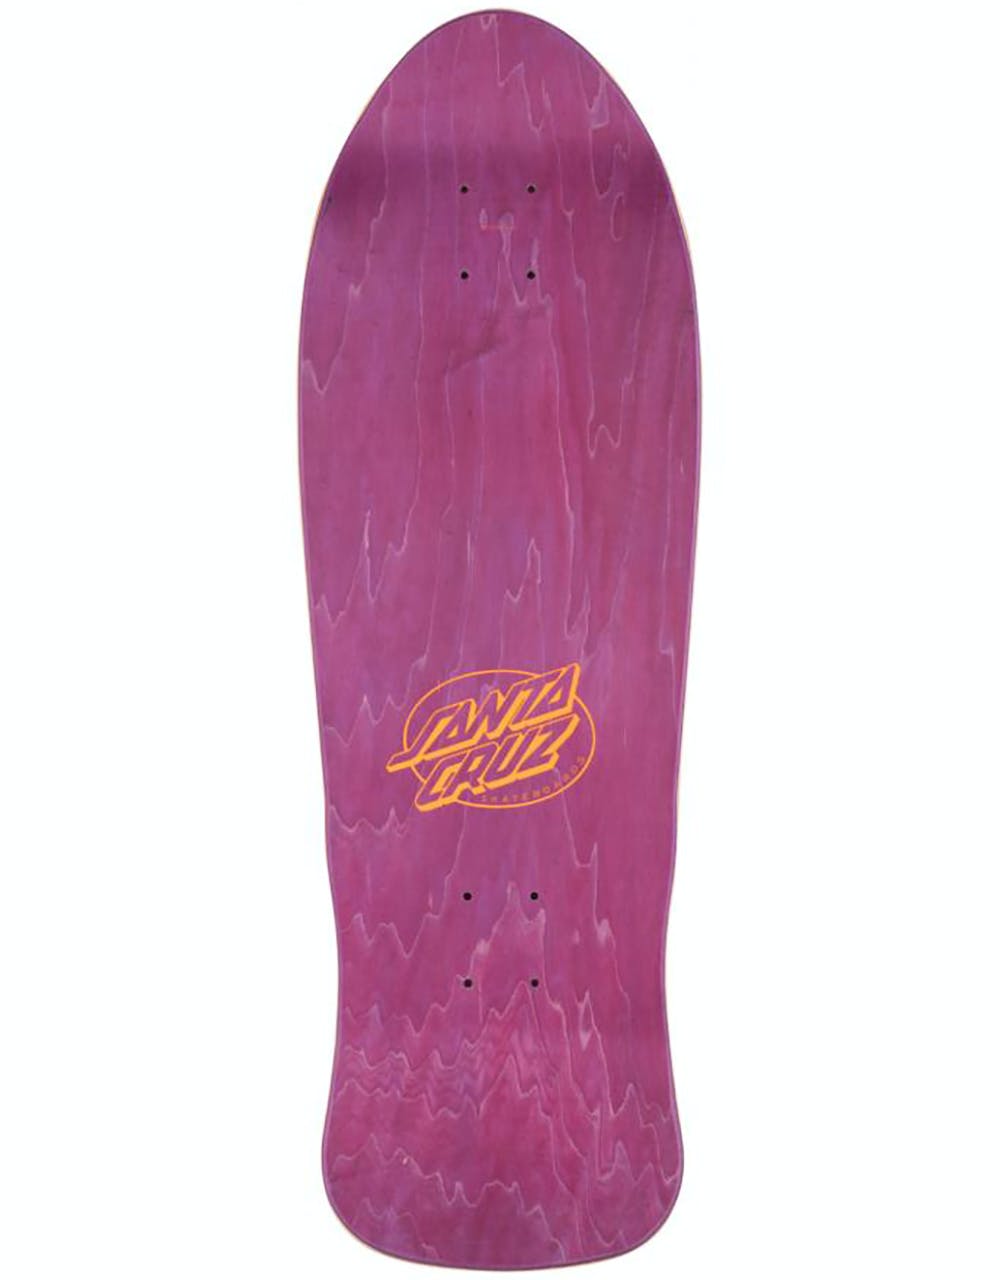 Santa Cruz O'Brien Reaper Reissue Skateboard Deck - 9.85"